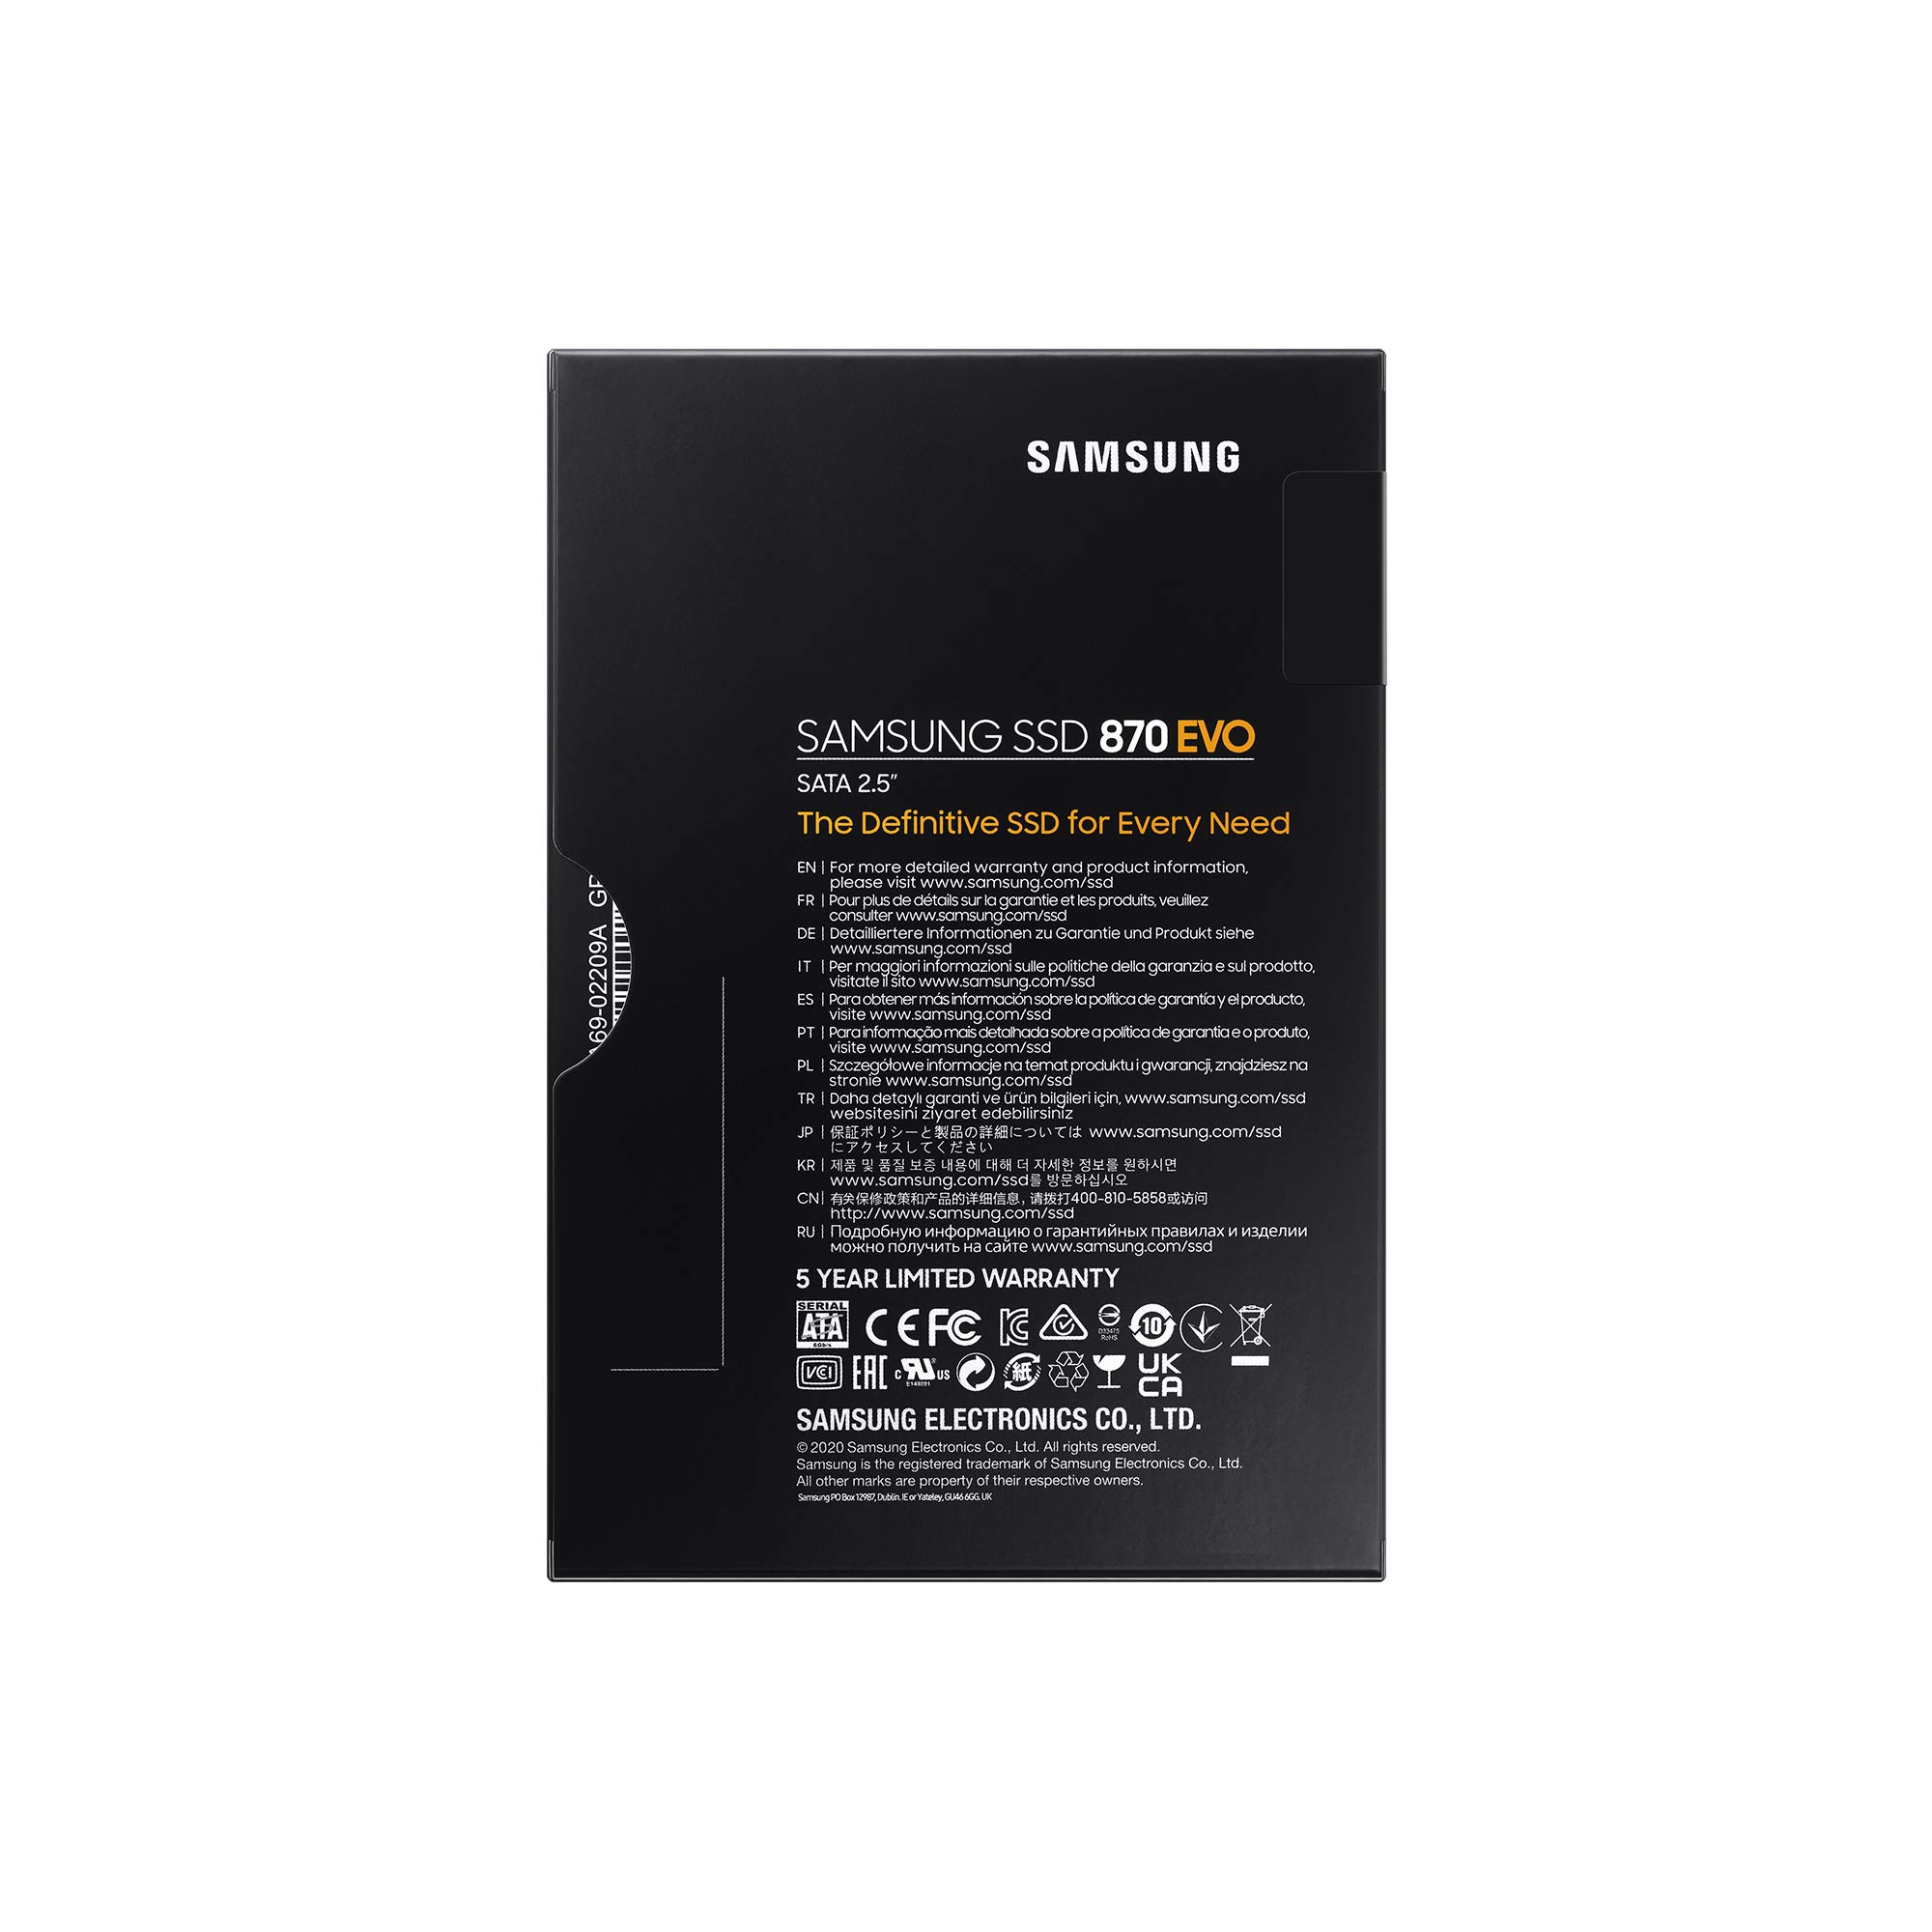 SAMSUNG SSD 870 EVO, 4 TB, Form Factor 2.5”, Intelligent Turbo Write, Magician 6 Software, Black